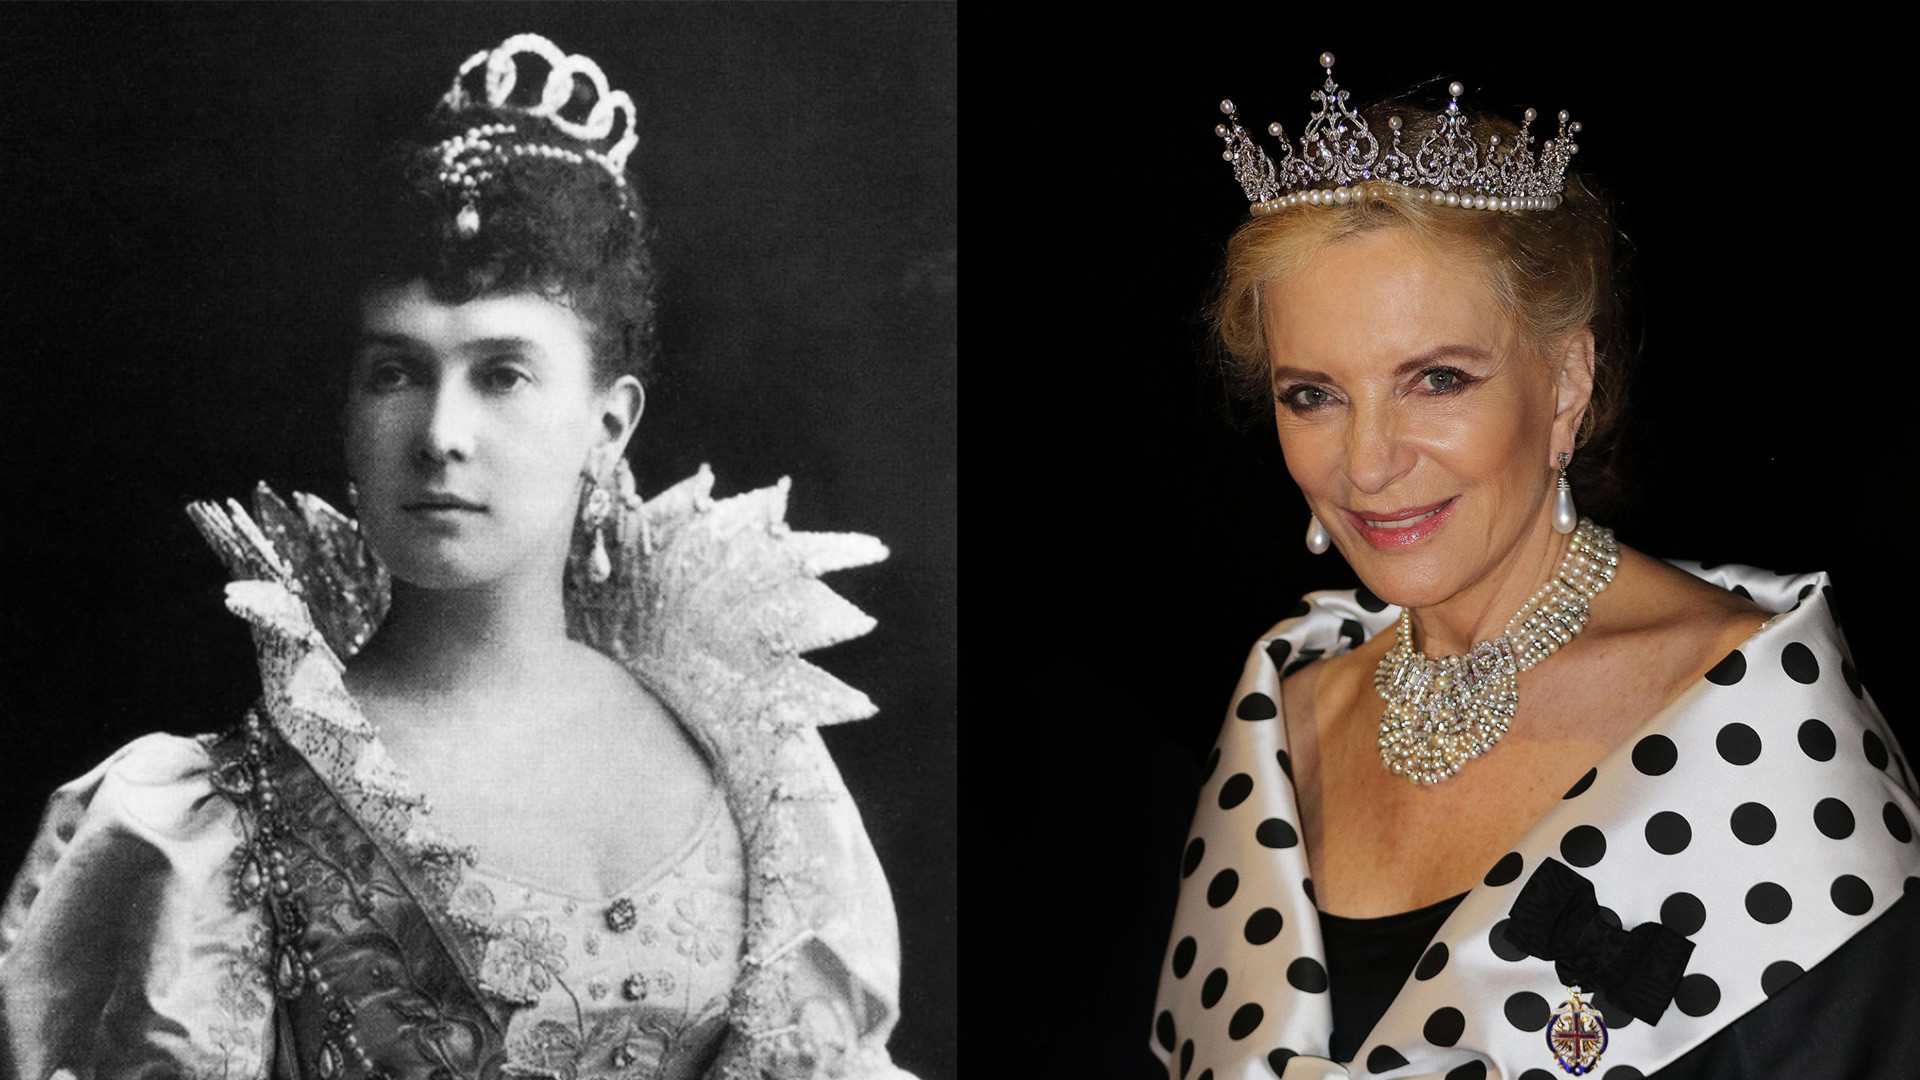 Left: Grand Duchess Maria Pavlovna. Right: Princess Michael of Kent.